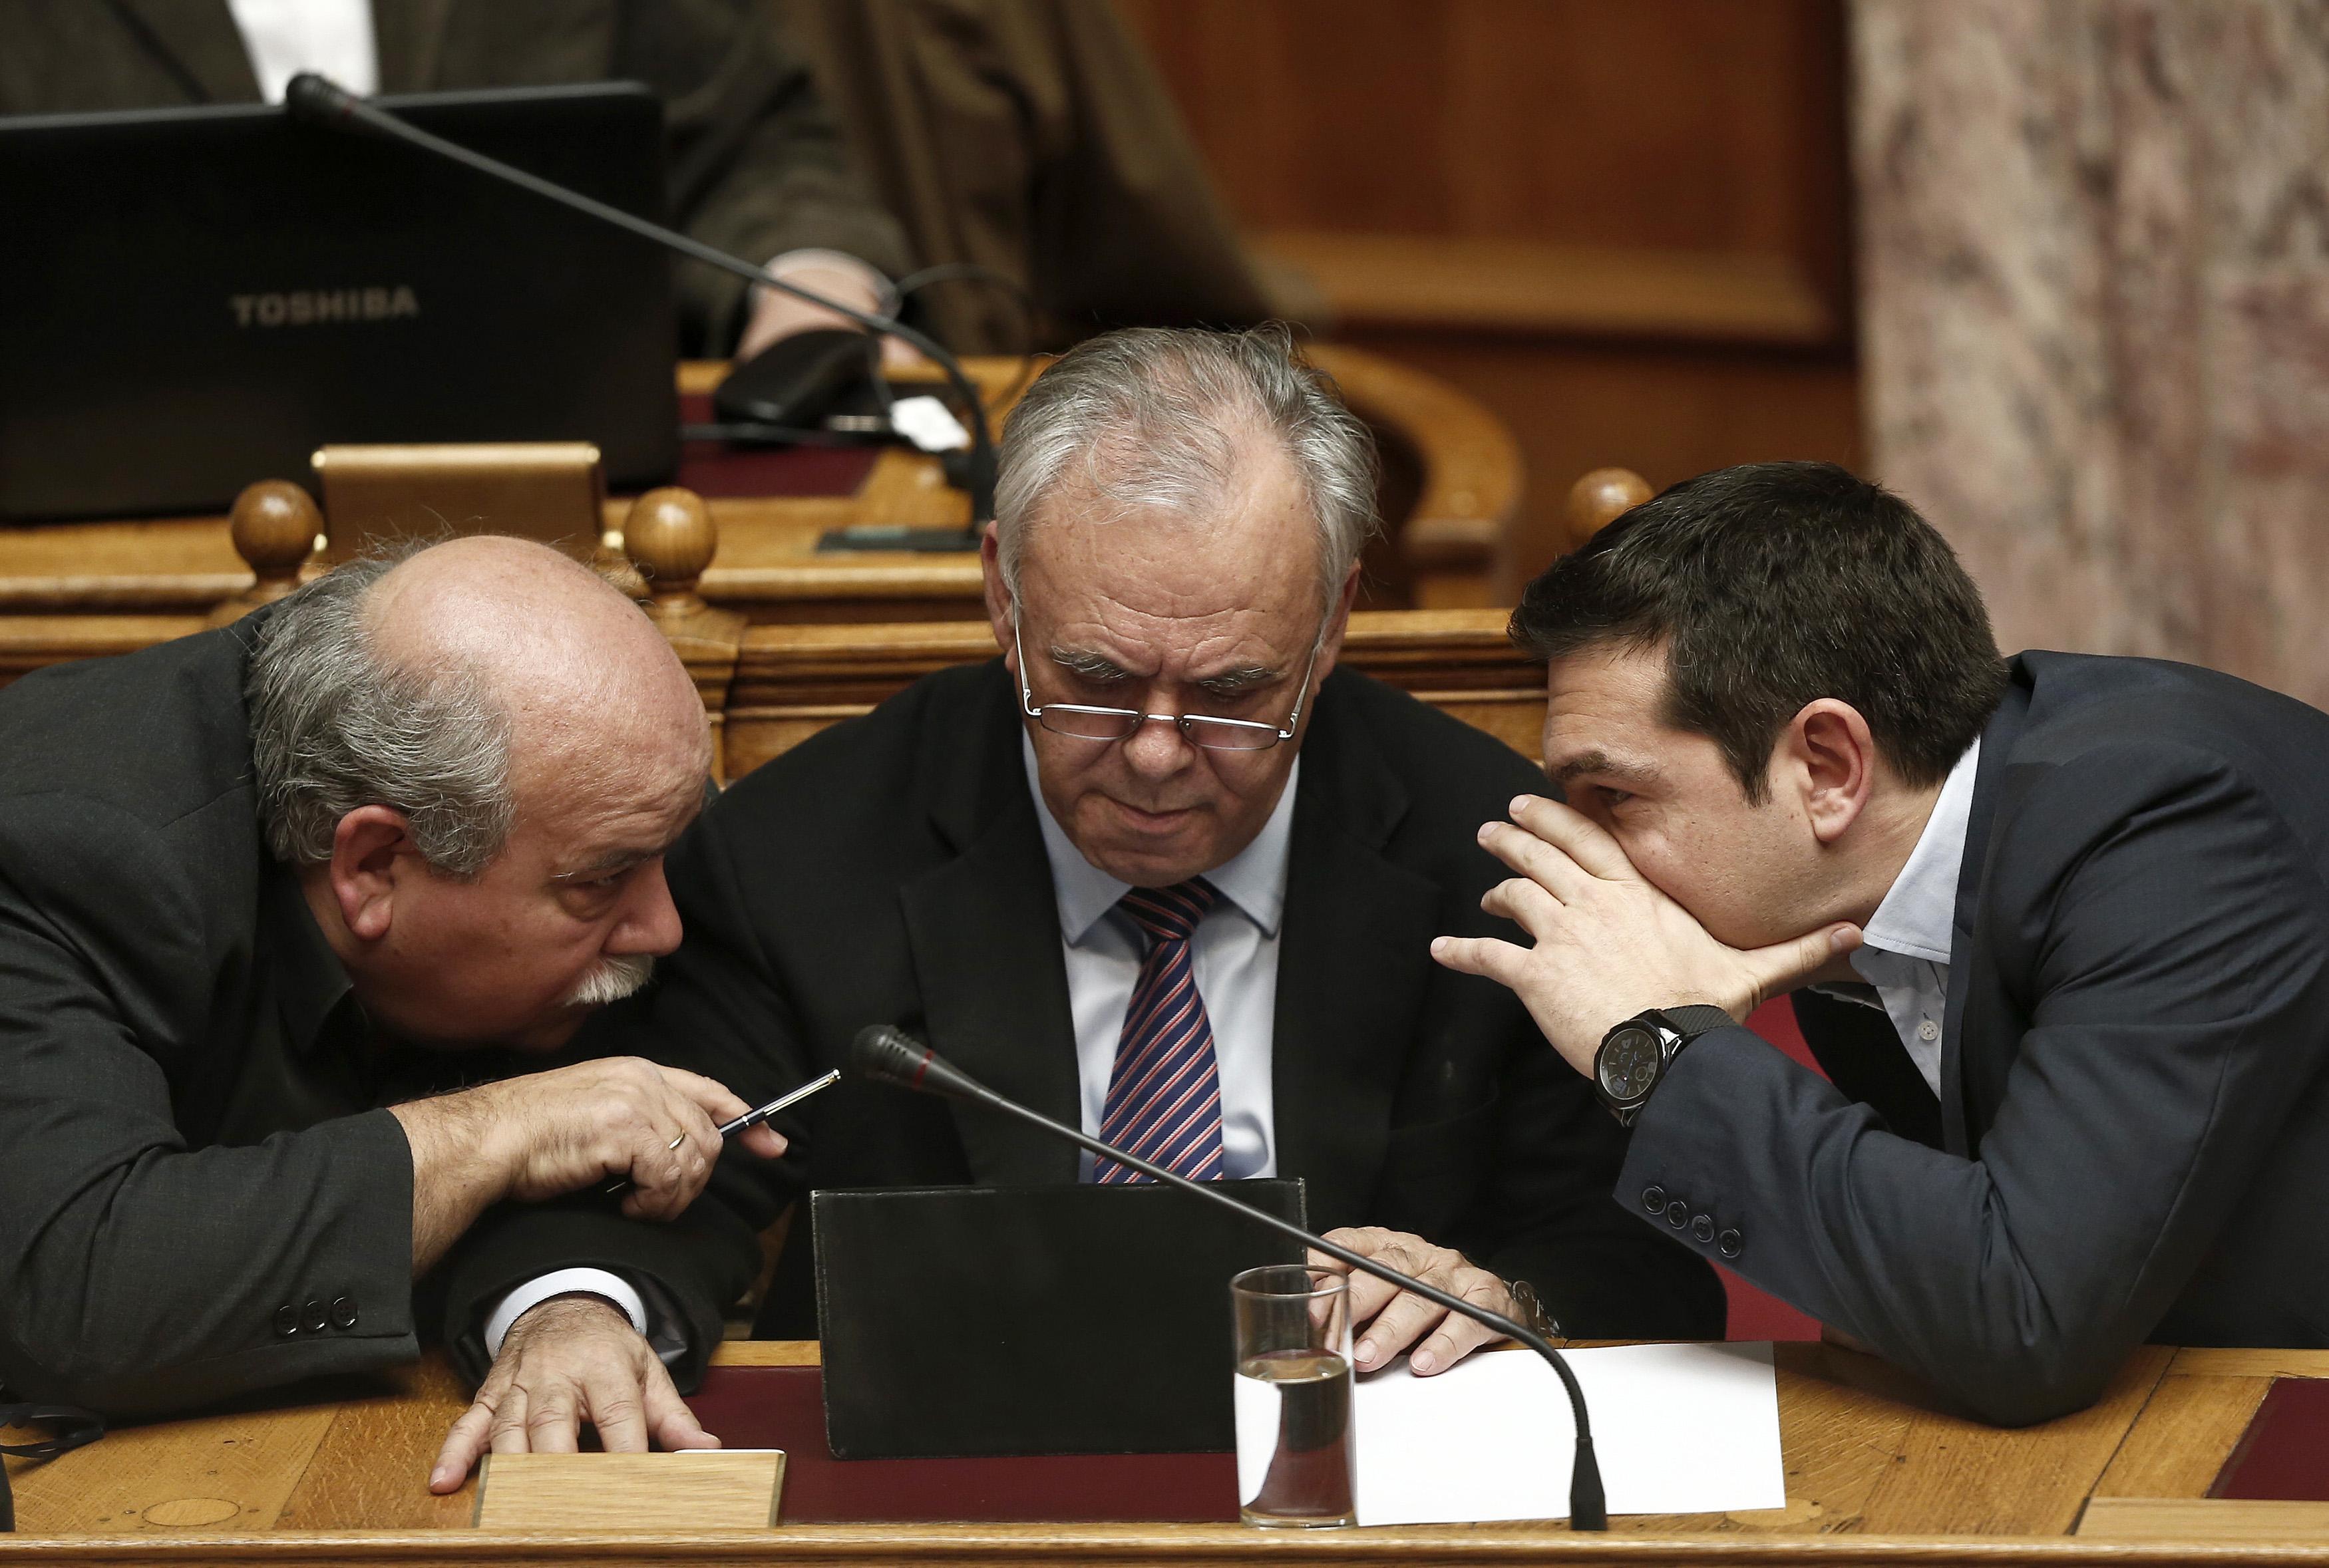 Rejected Eurogroup Draft Spoke of "Extending" Greek Bailout